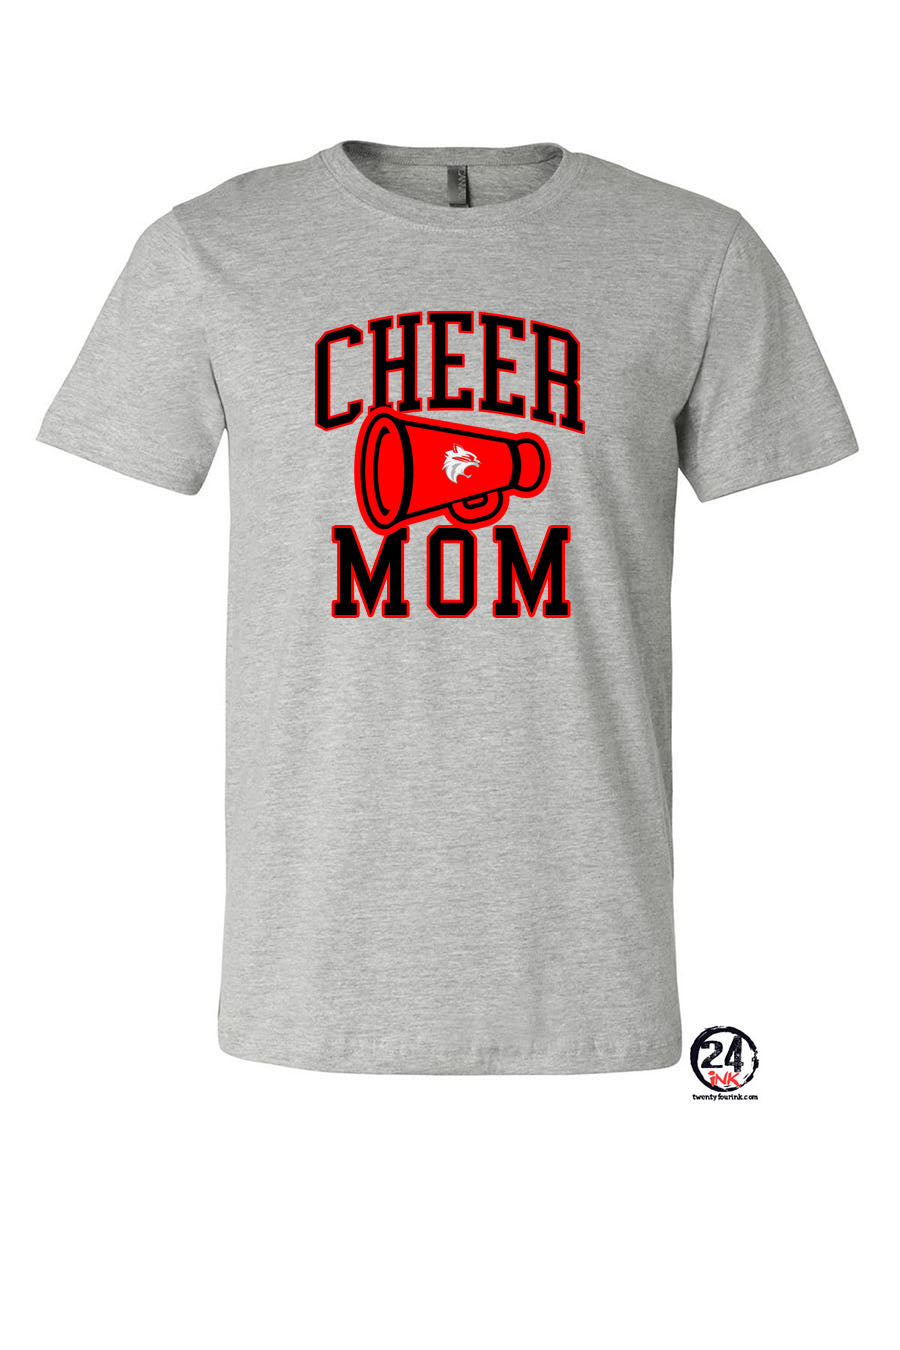 High Point Cheer design 7 T-Shirt